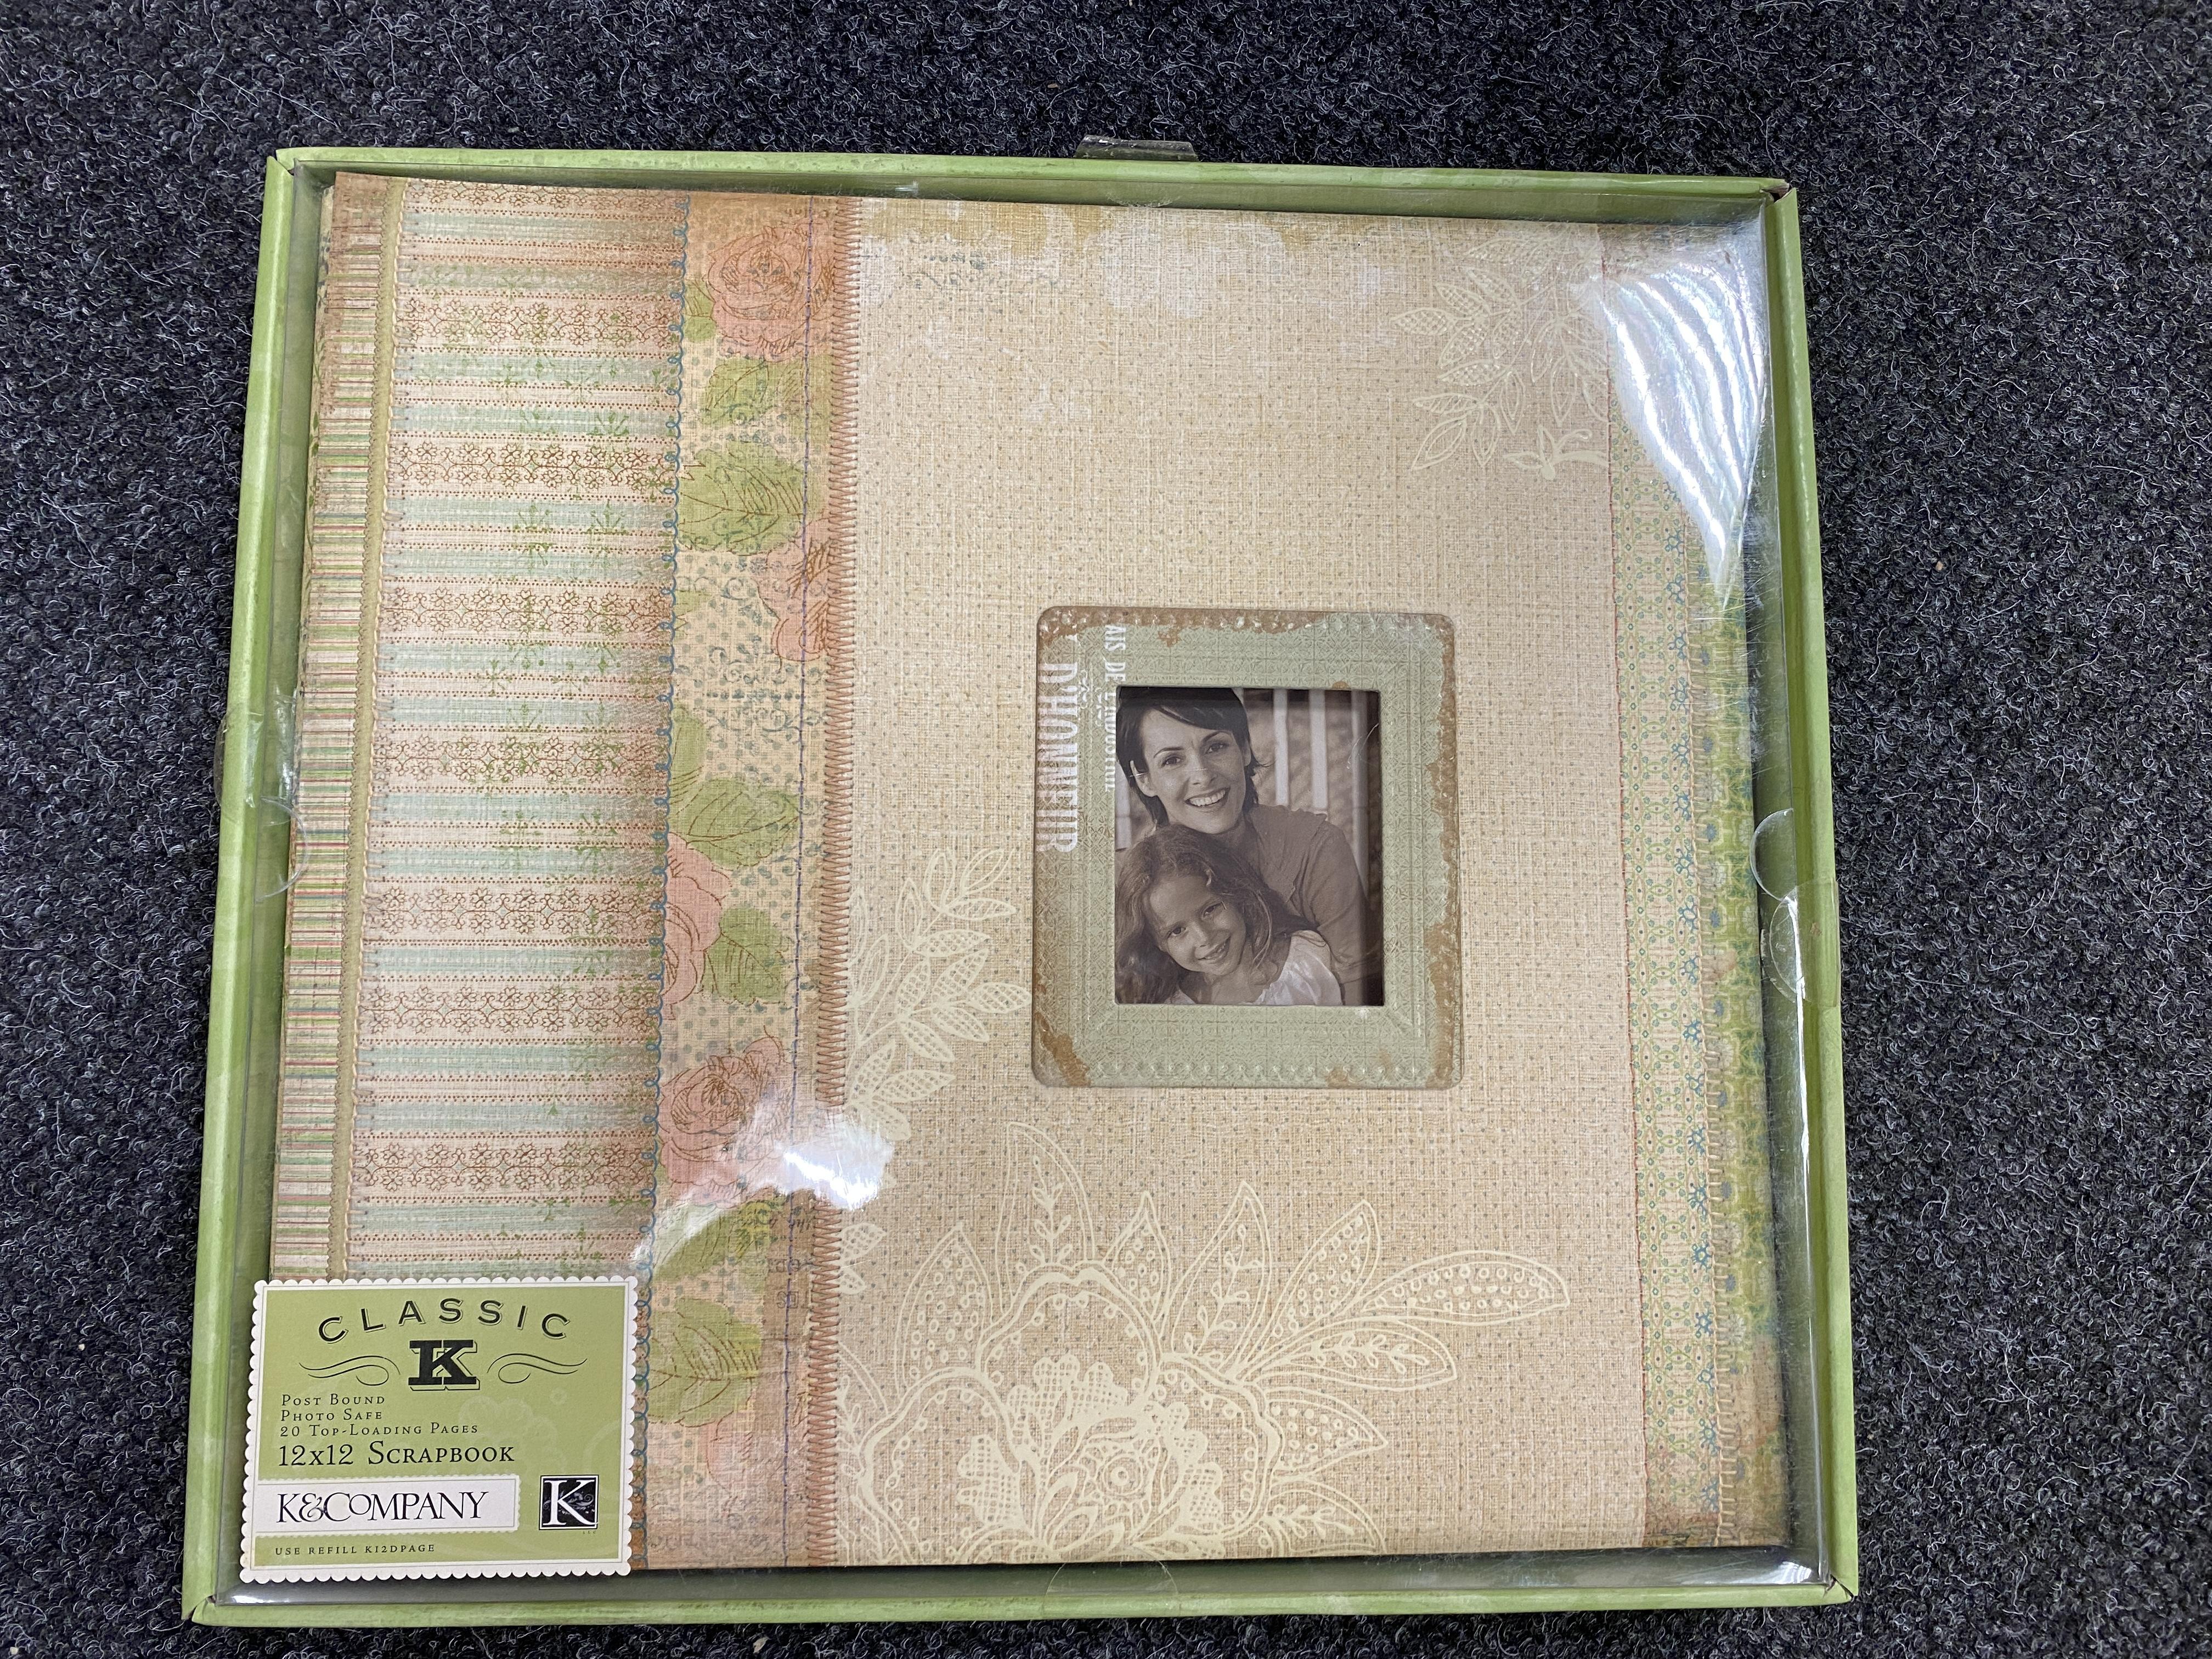 K & Company 12' x 12' Scrapbook Album - CLASSIC K MARGO